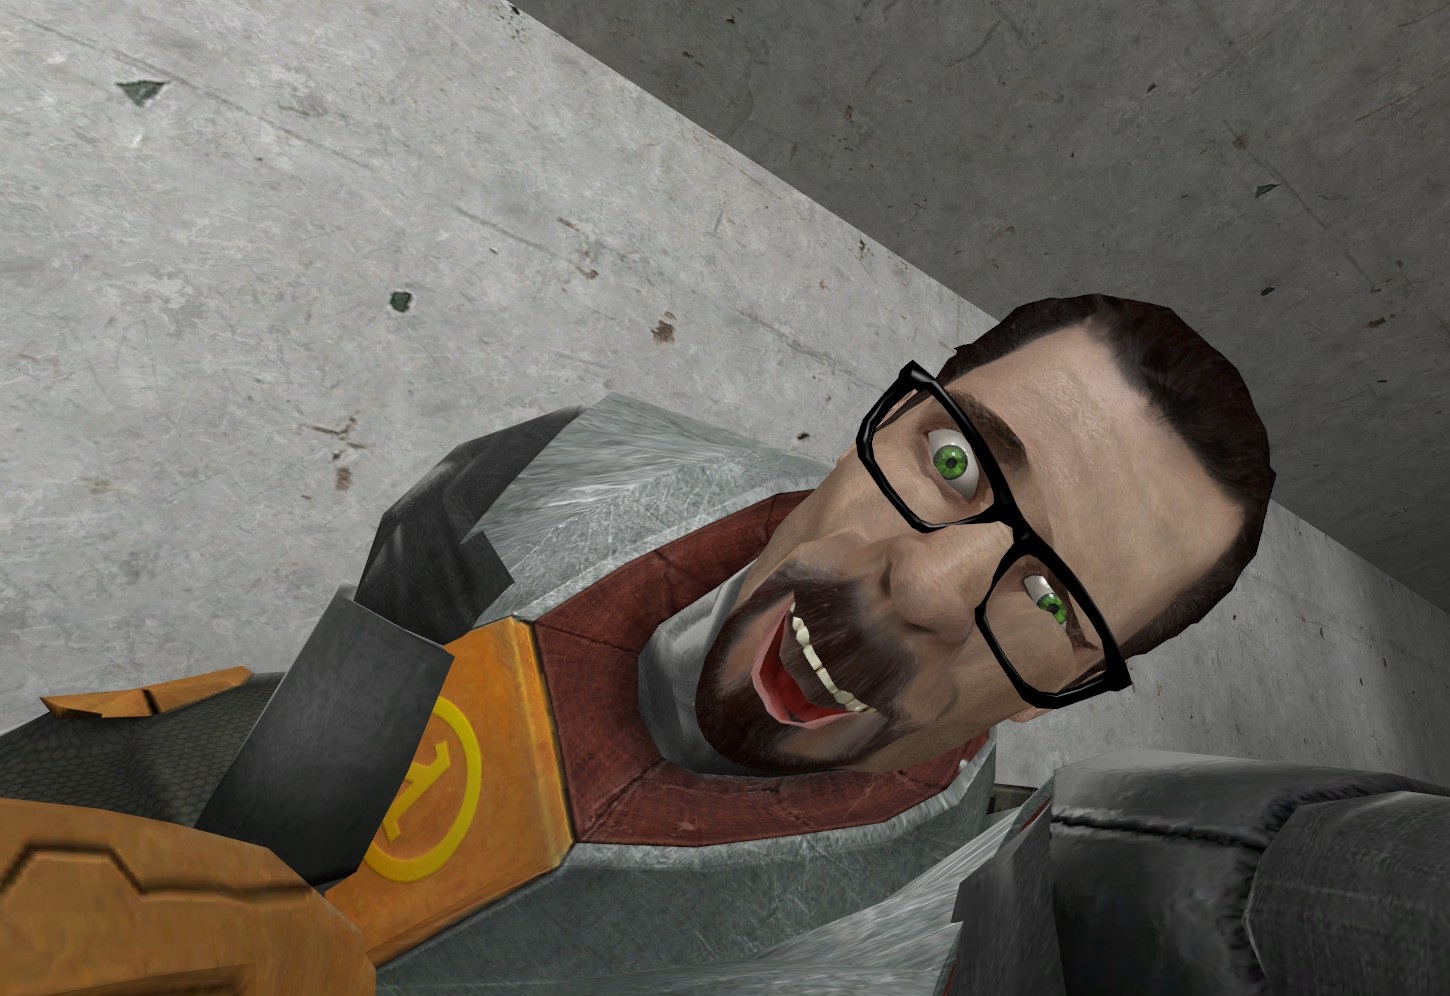 Half Life: Freeman's Adventures 2 for Half-Life 2